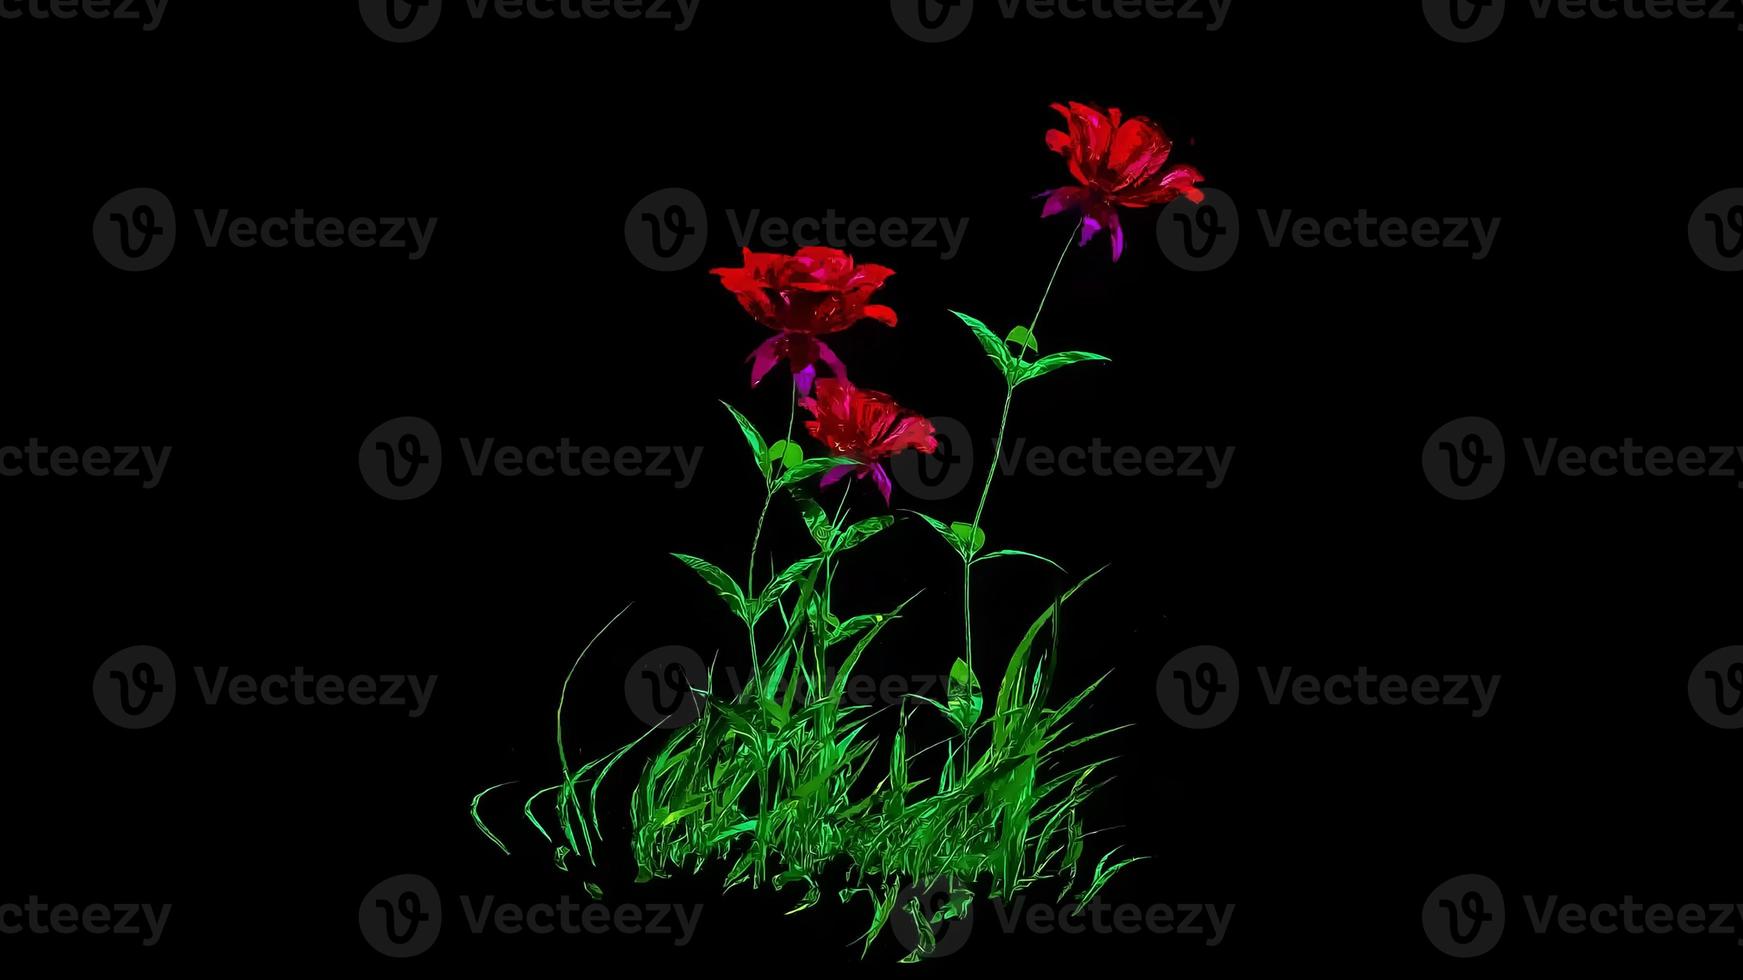 representación digital botánica de flores rojas foto